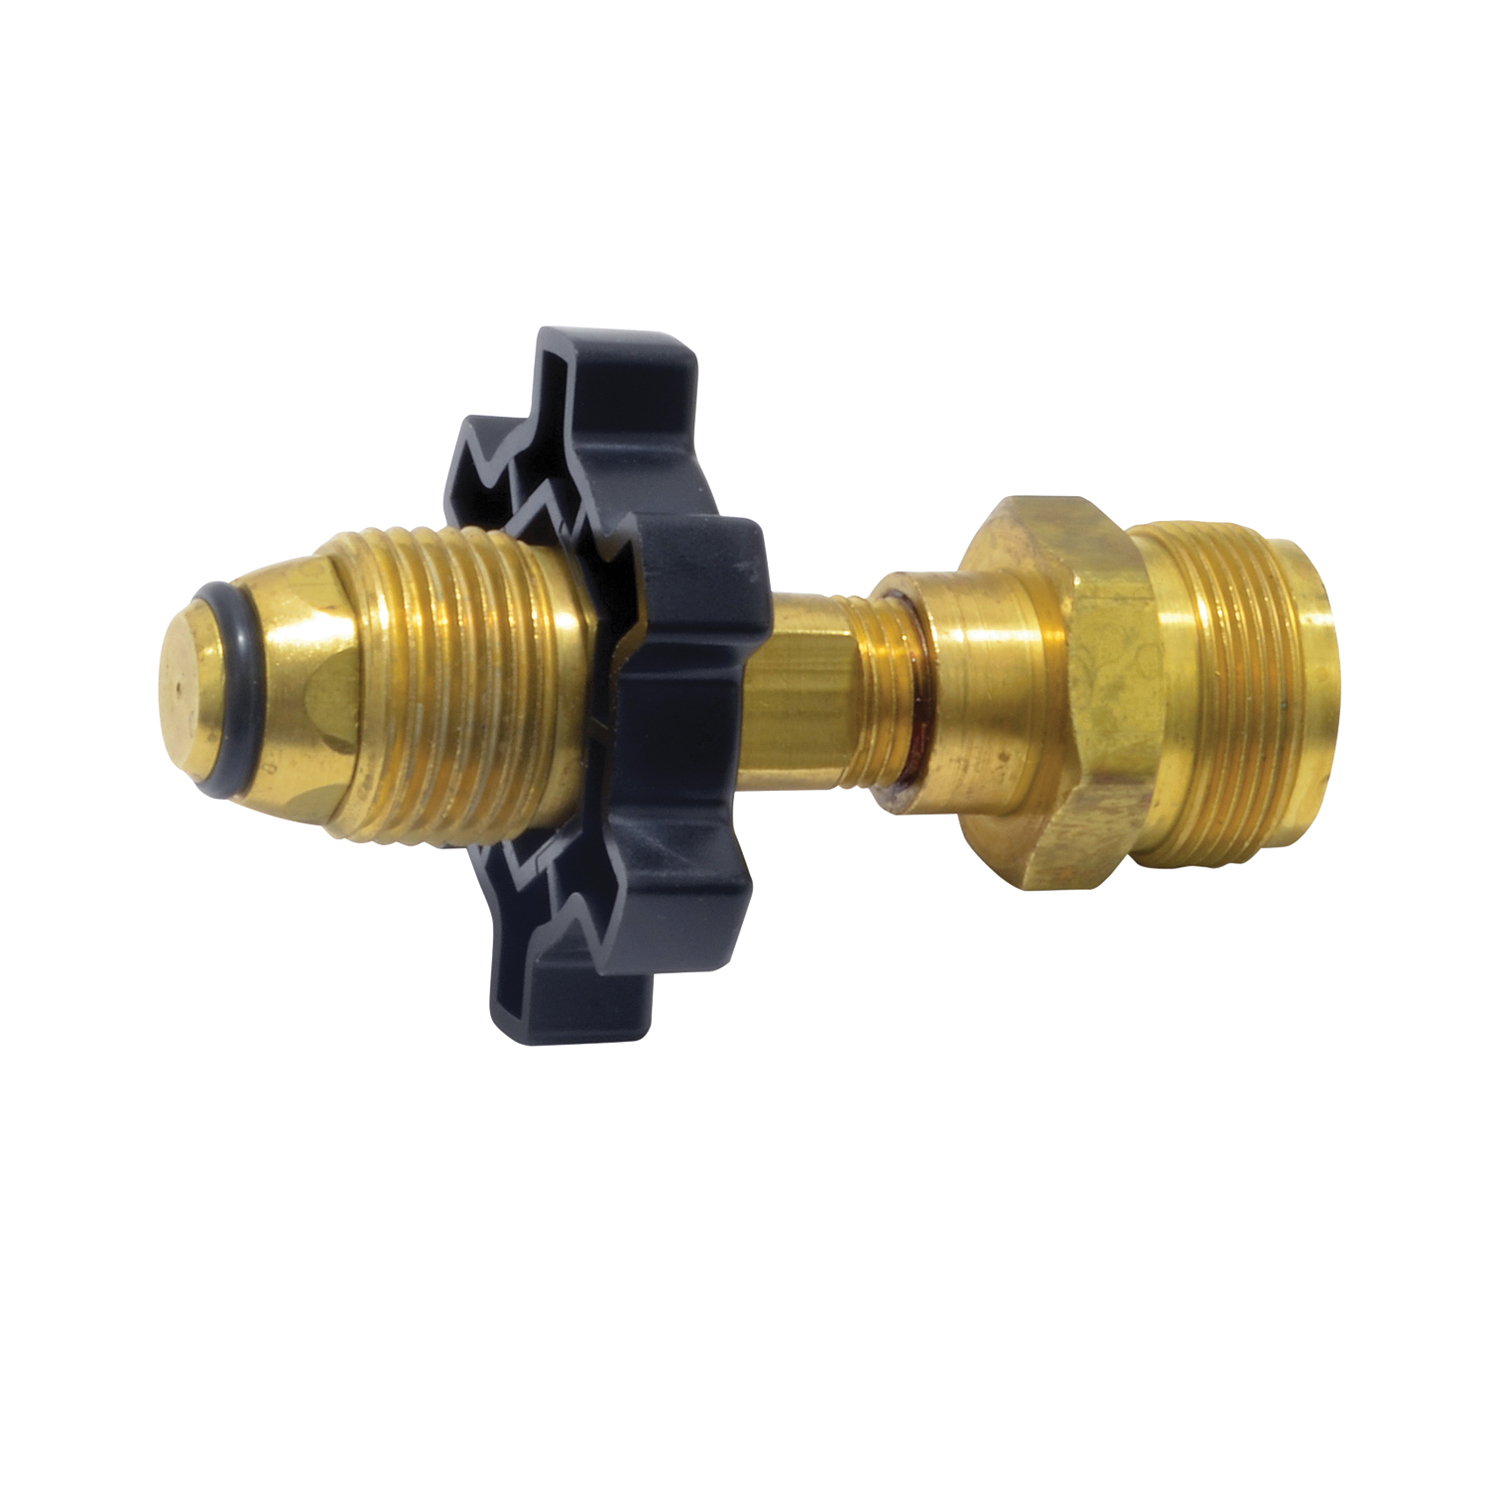 F273758 Cylinder Adapter, Brass, Gold